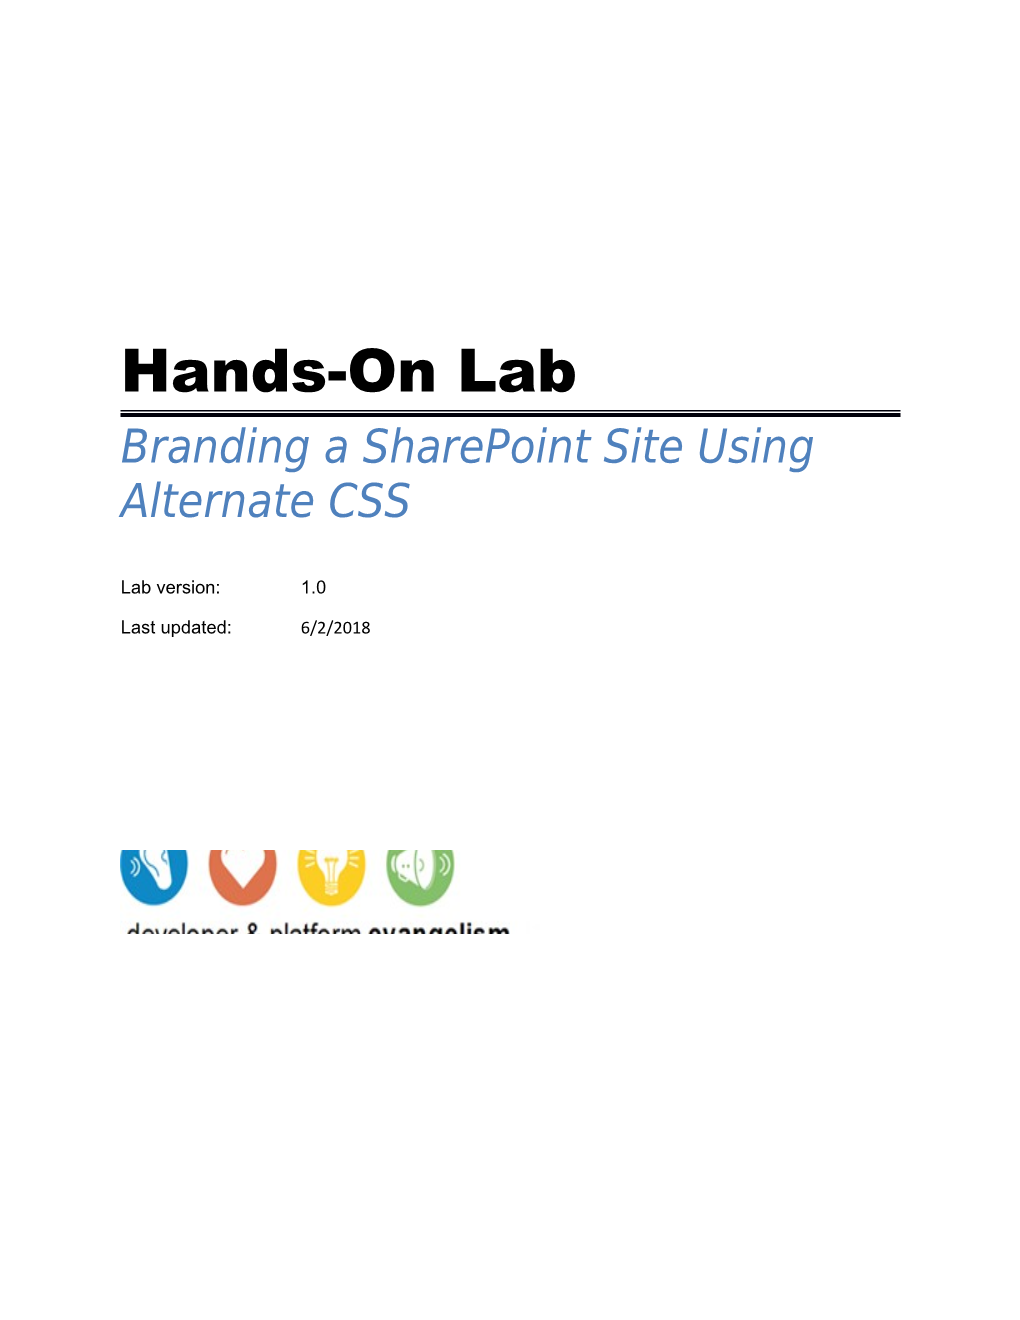 Branding a Sharepoint Site Using Alternate CSS